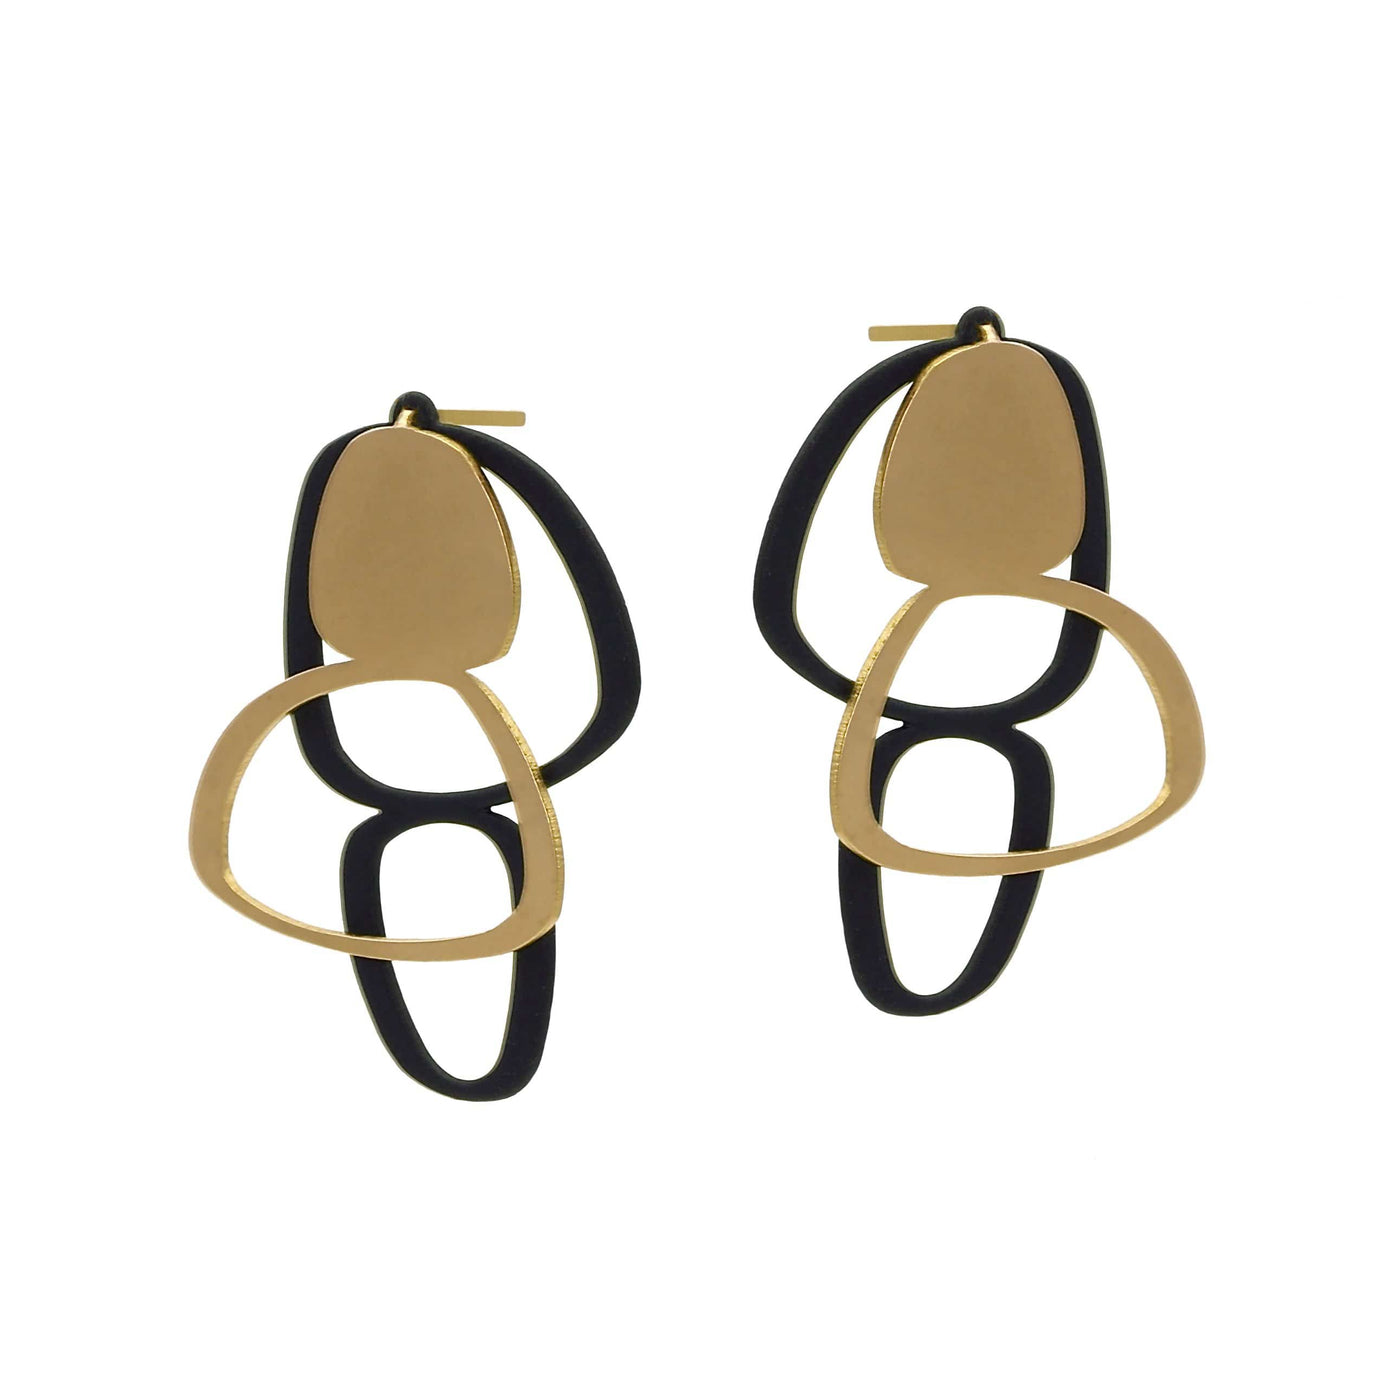 X2 Boulder Stud Earrings - Raw/ Black - inSync design